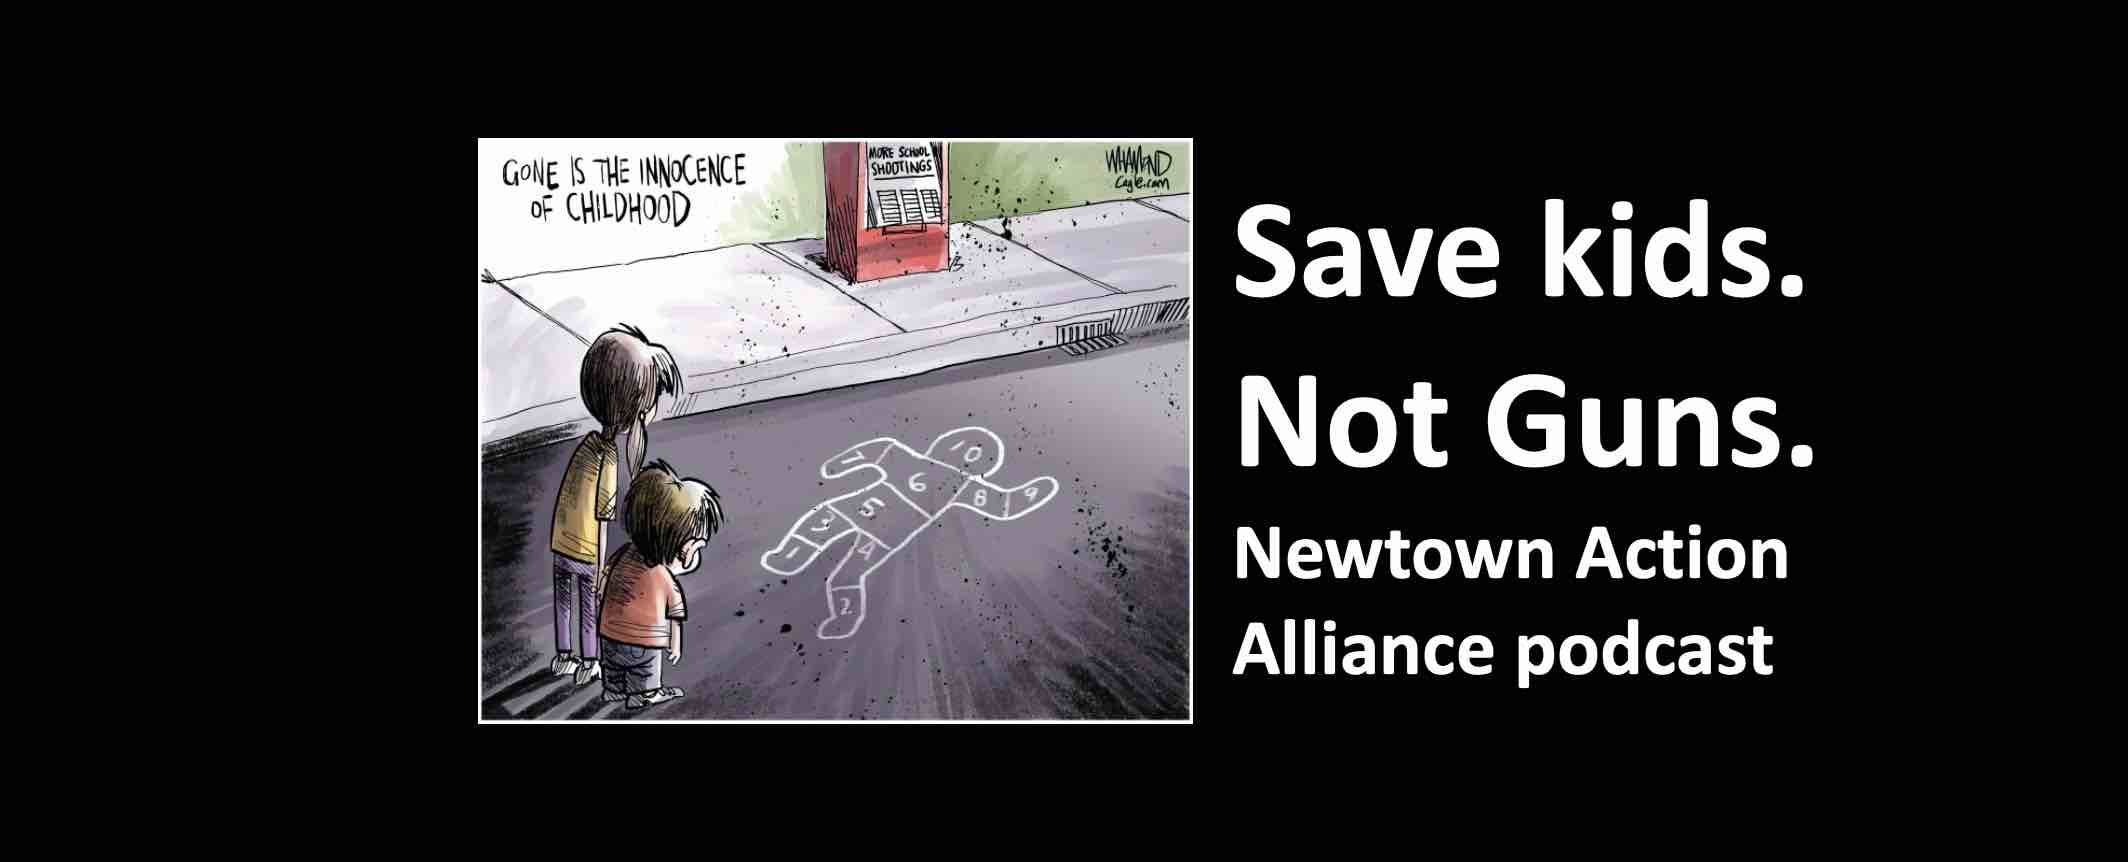 Save kids not guns. Newtown Action Alliance.